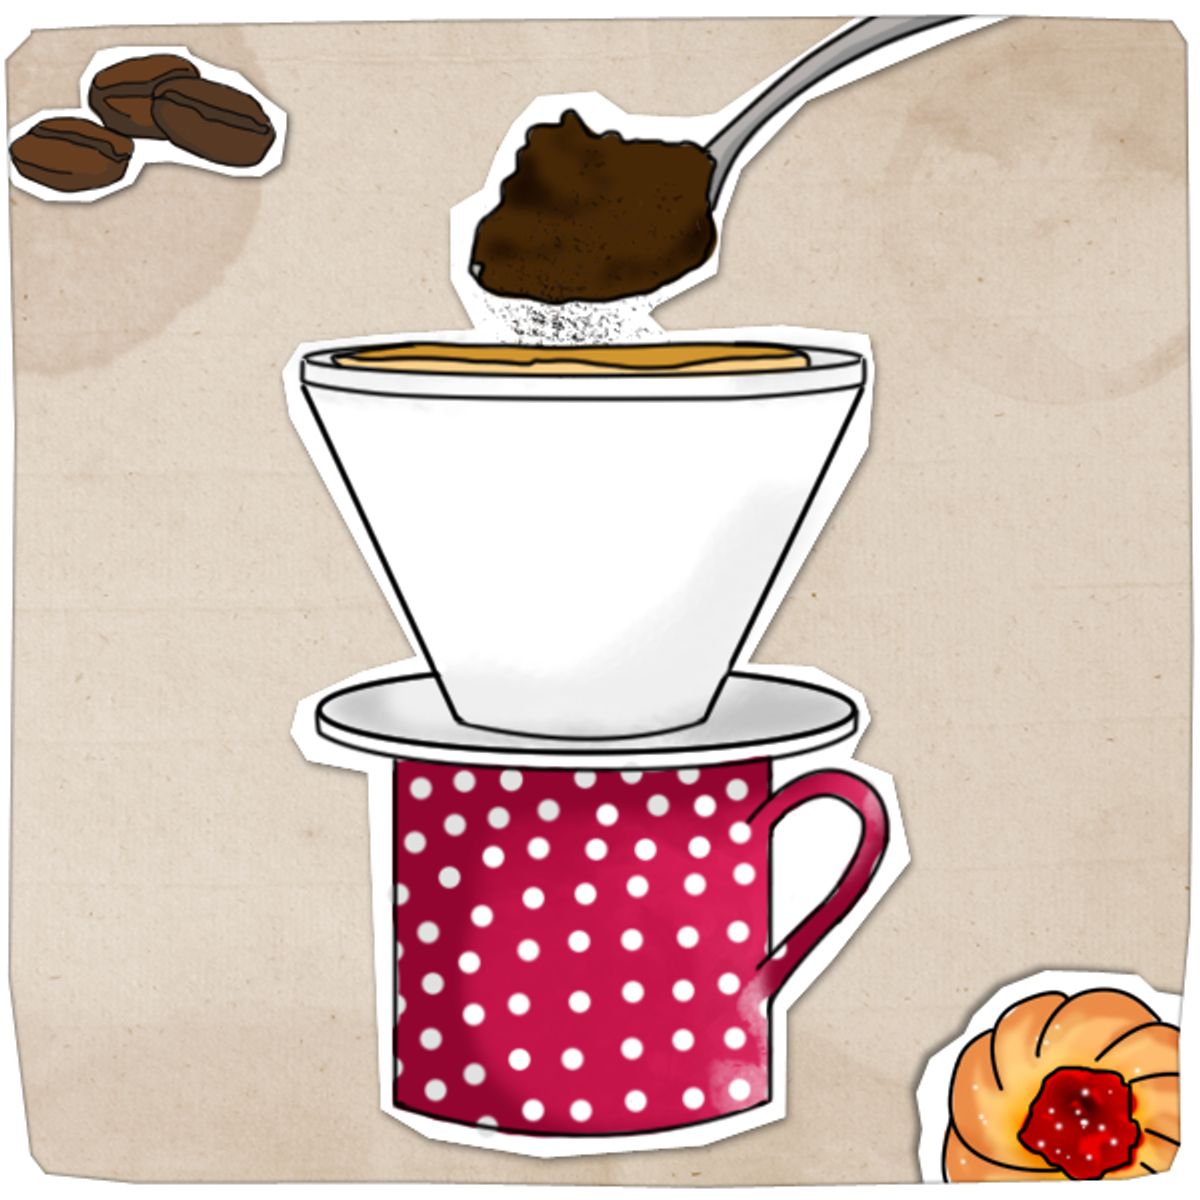 Filterkaffee kochen - so geht's Schritt für Schritt - kaffeepulver_einfuellen